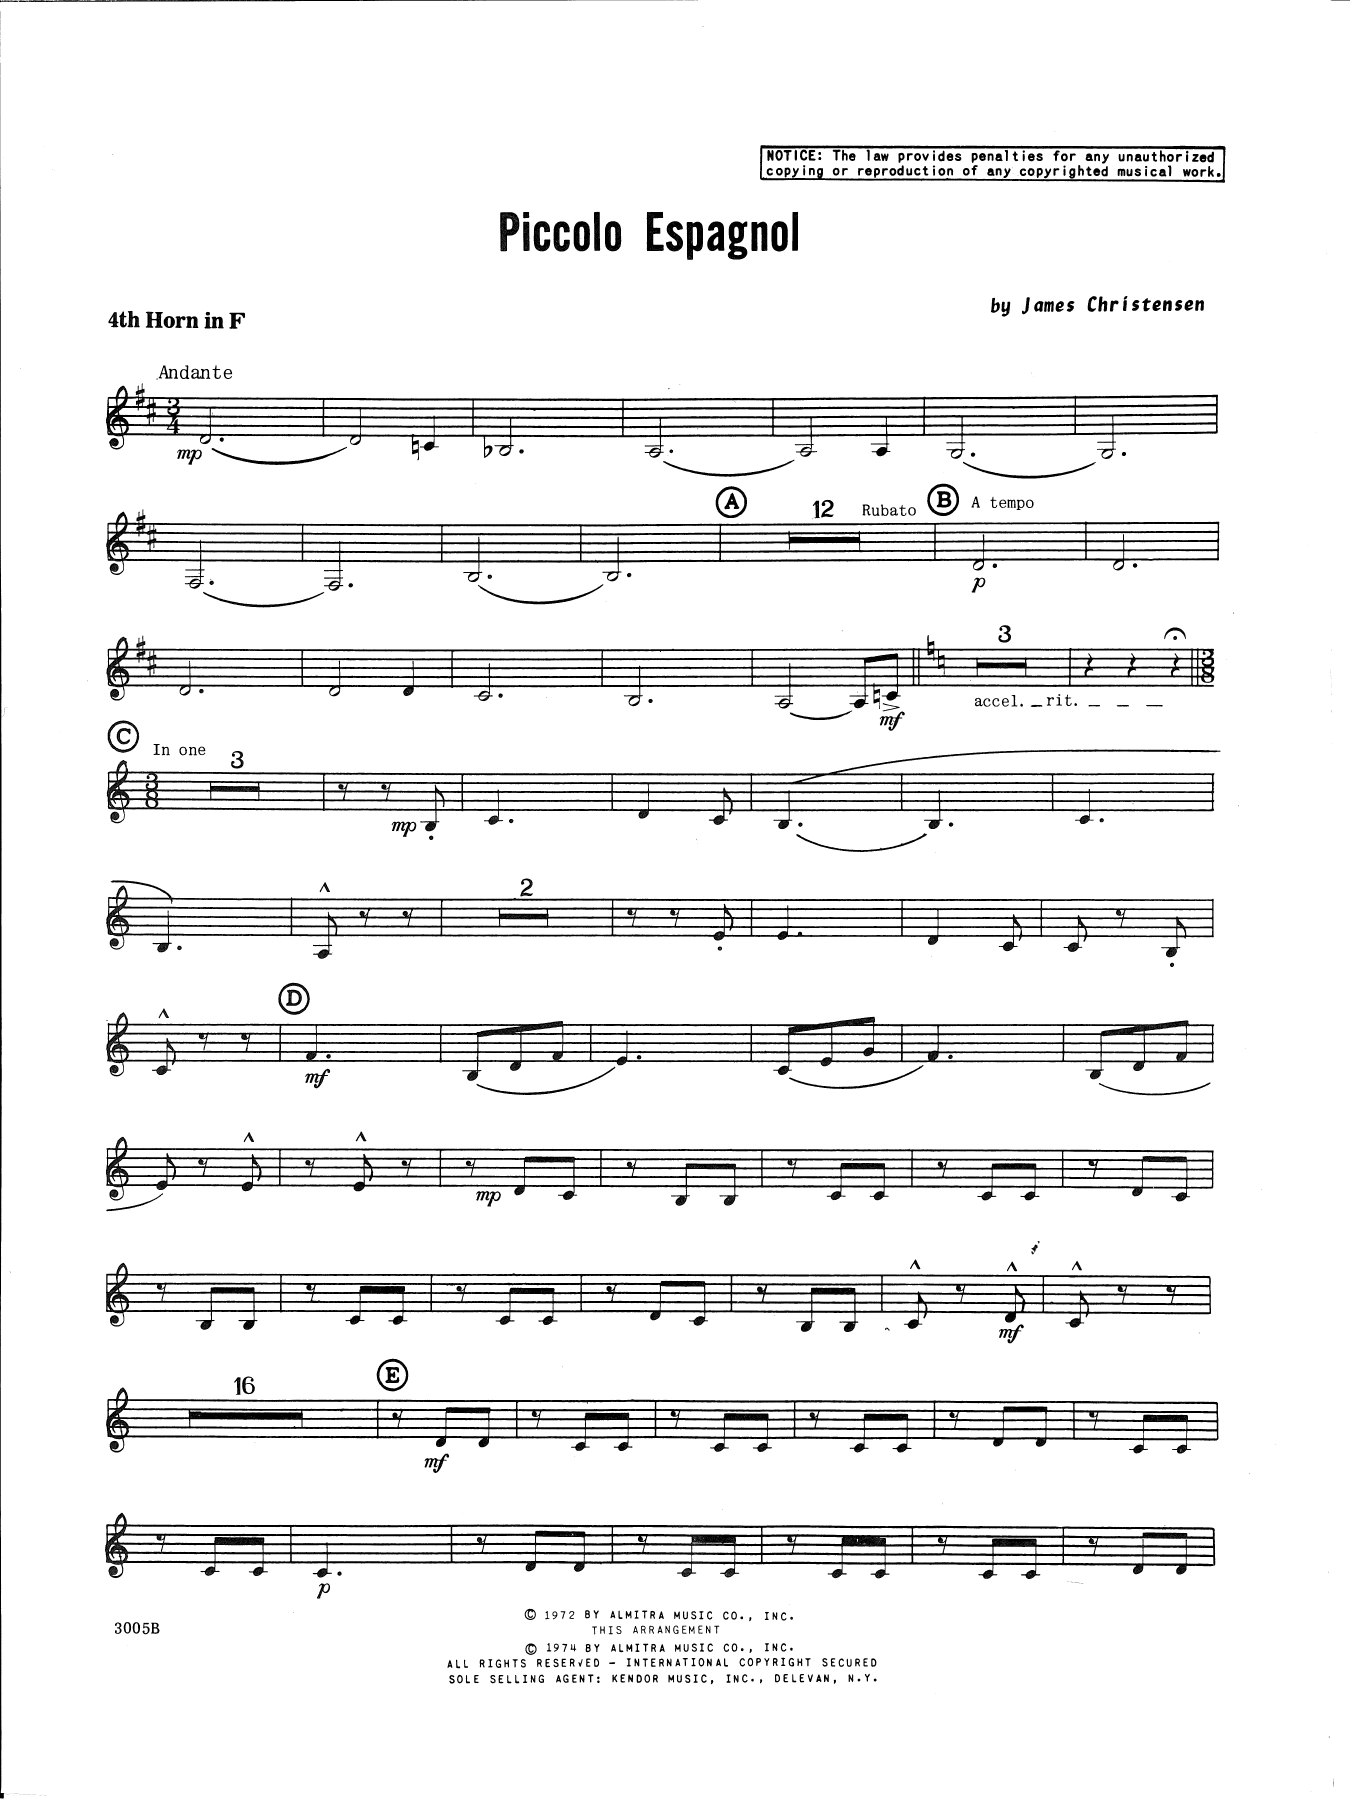 Download James Christensen Piccolo Espagnol - 4th Horn in F Sheet Music